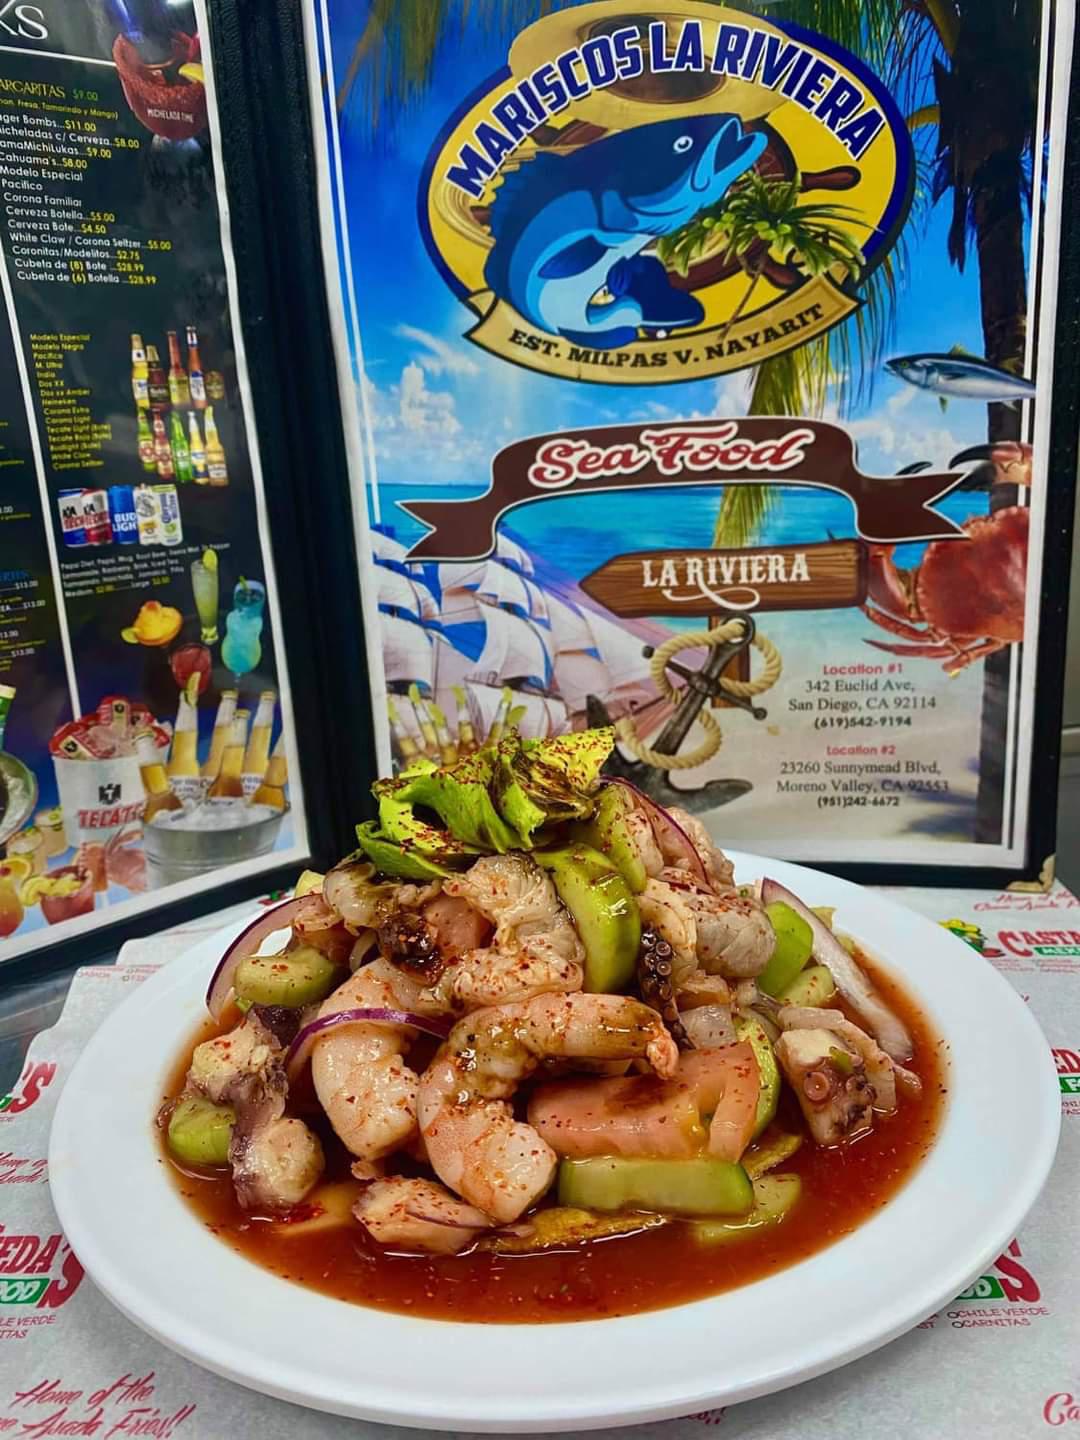 Mariscos La Riviera Estilo Milpas Viejas Nayarit CastanÌeda's Mexican Food- seafood